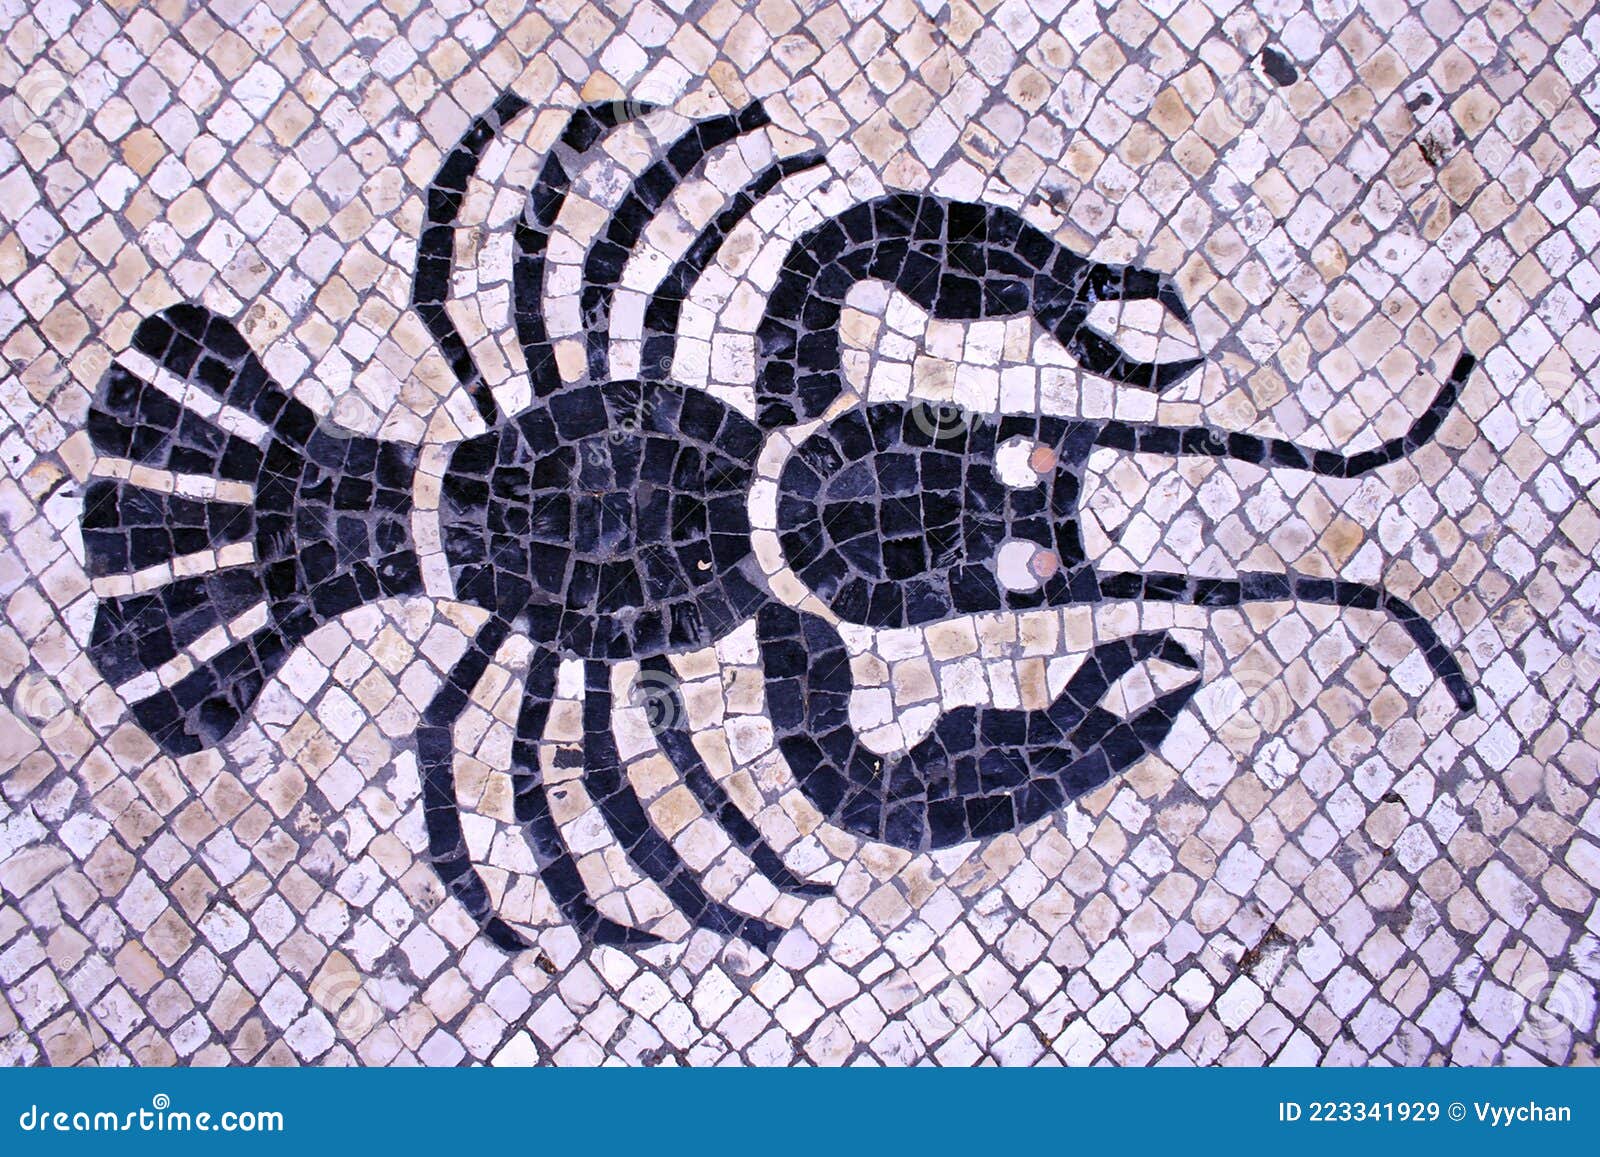 portuguese macau mosaic arts craftsmanship ocean marine lobster macao mosaico cobblestone street cultural heritage architecture